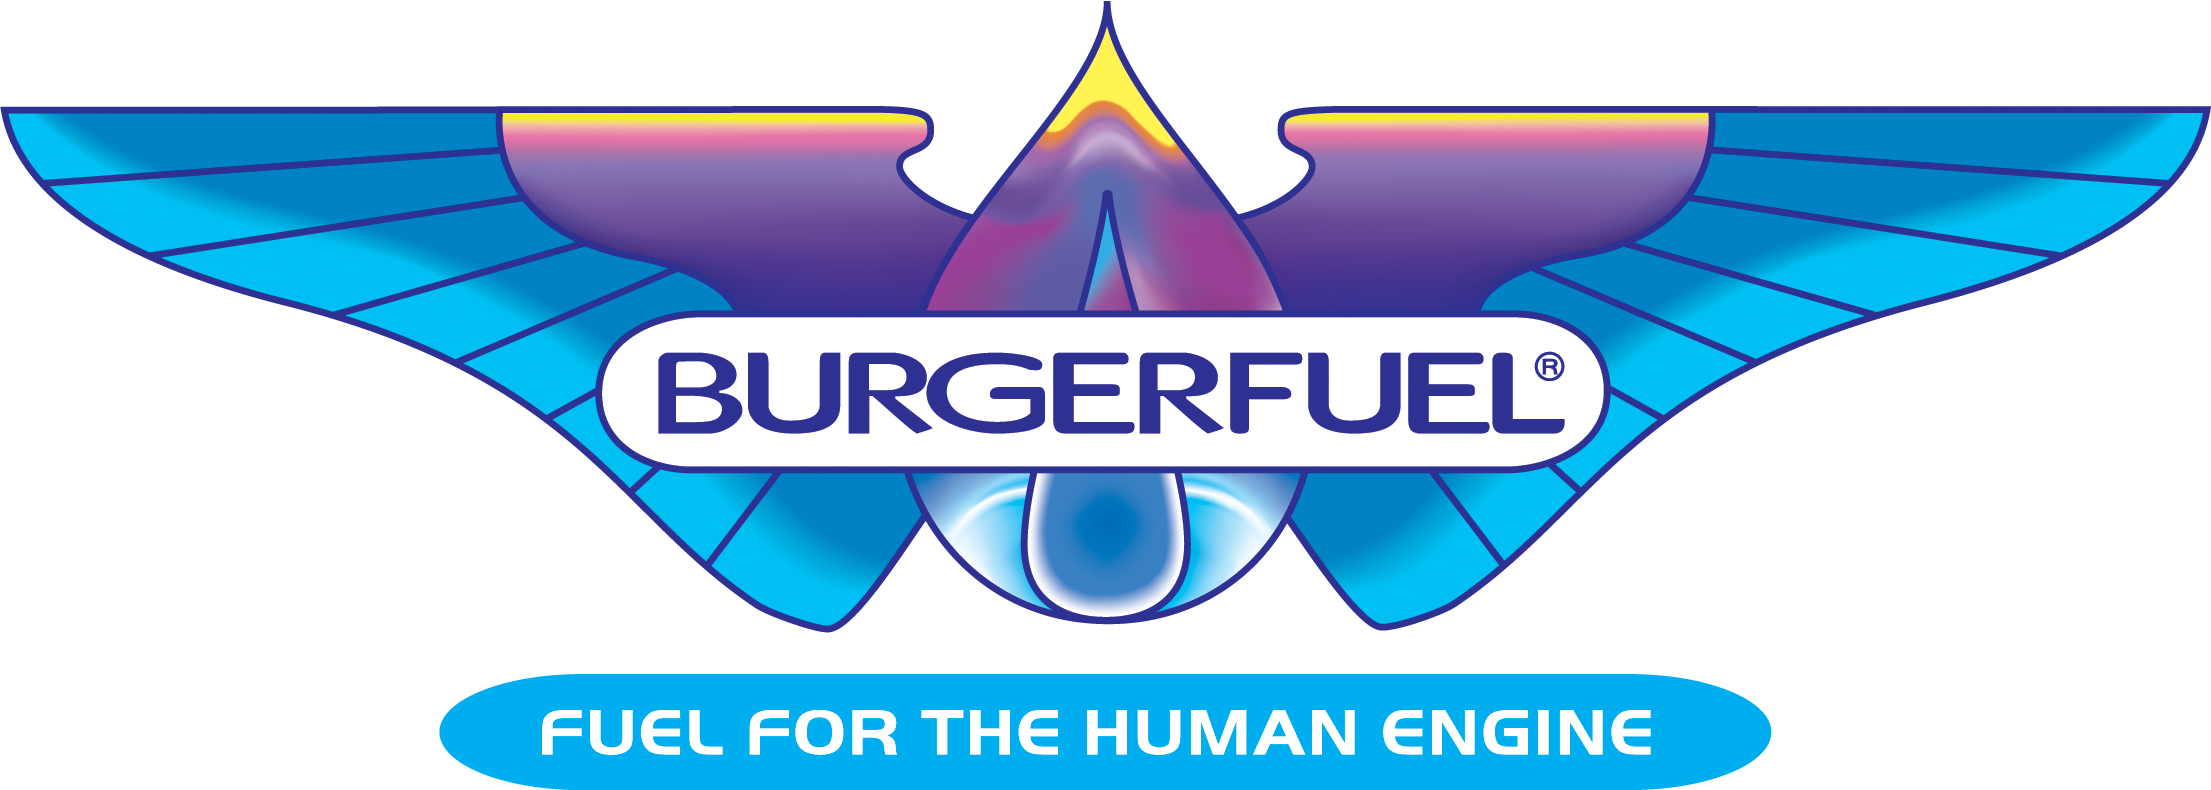 burgerfuel-logo.png